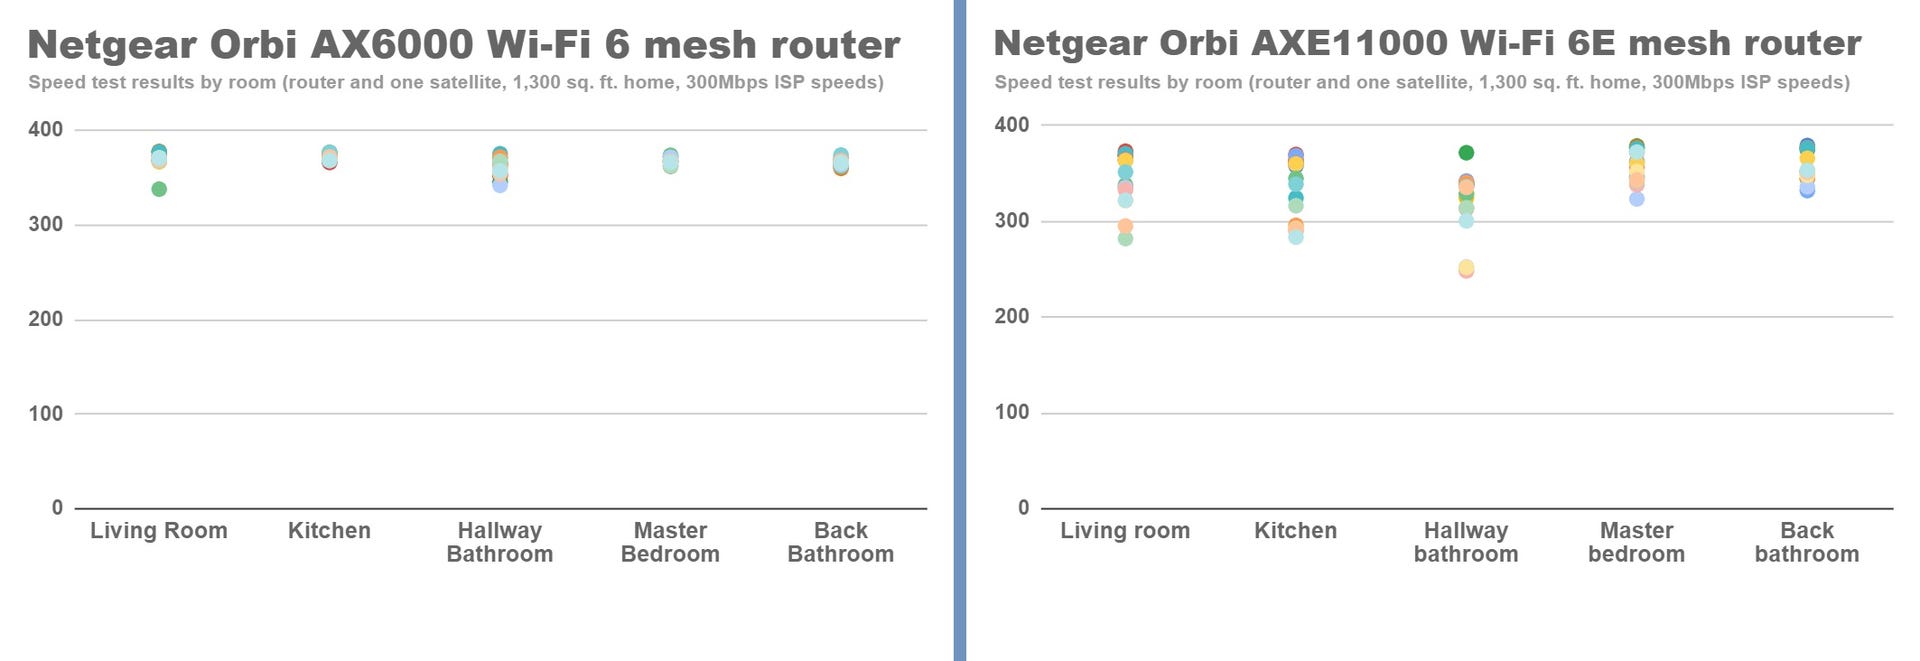 netgear-orbi-ax6000-and-axe11000-speed-spreads